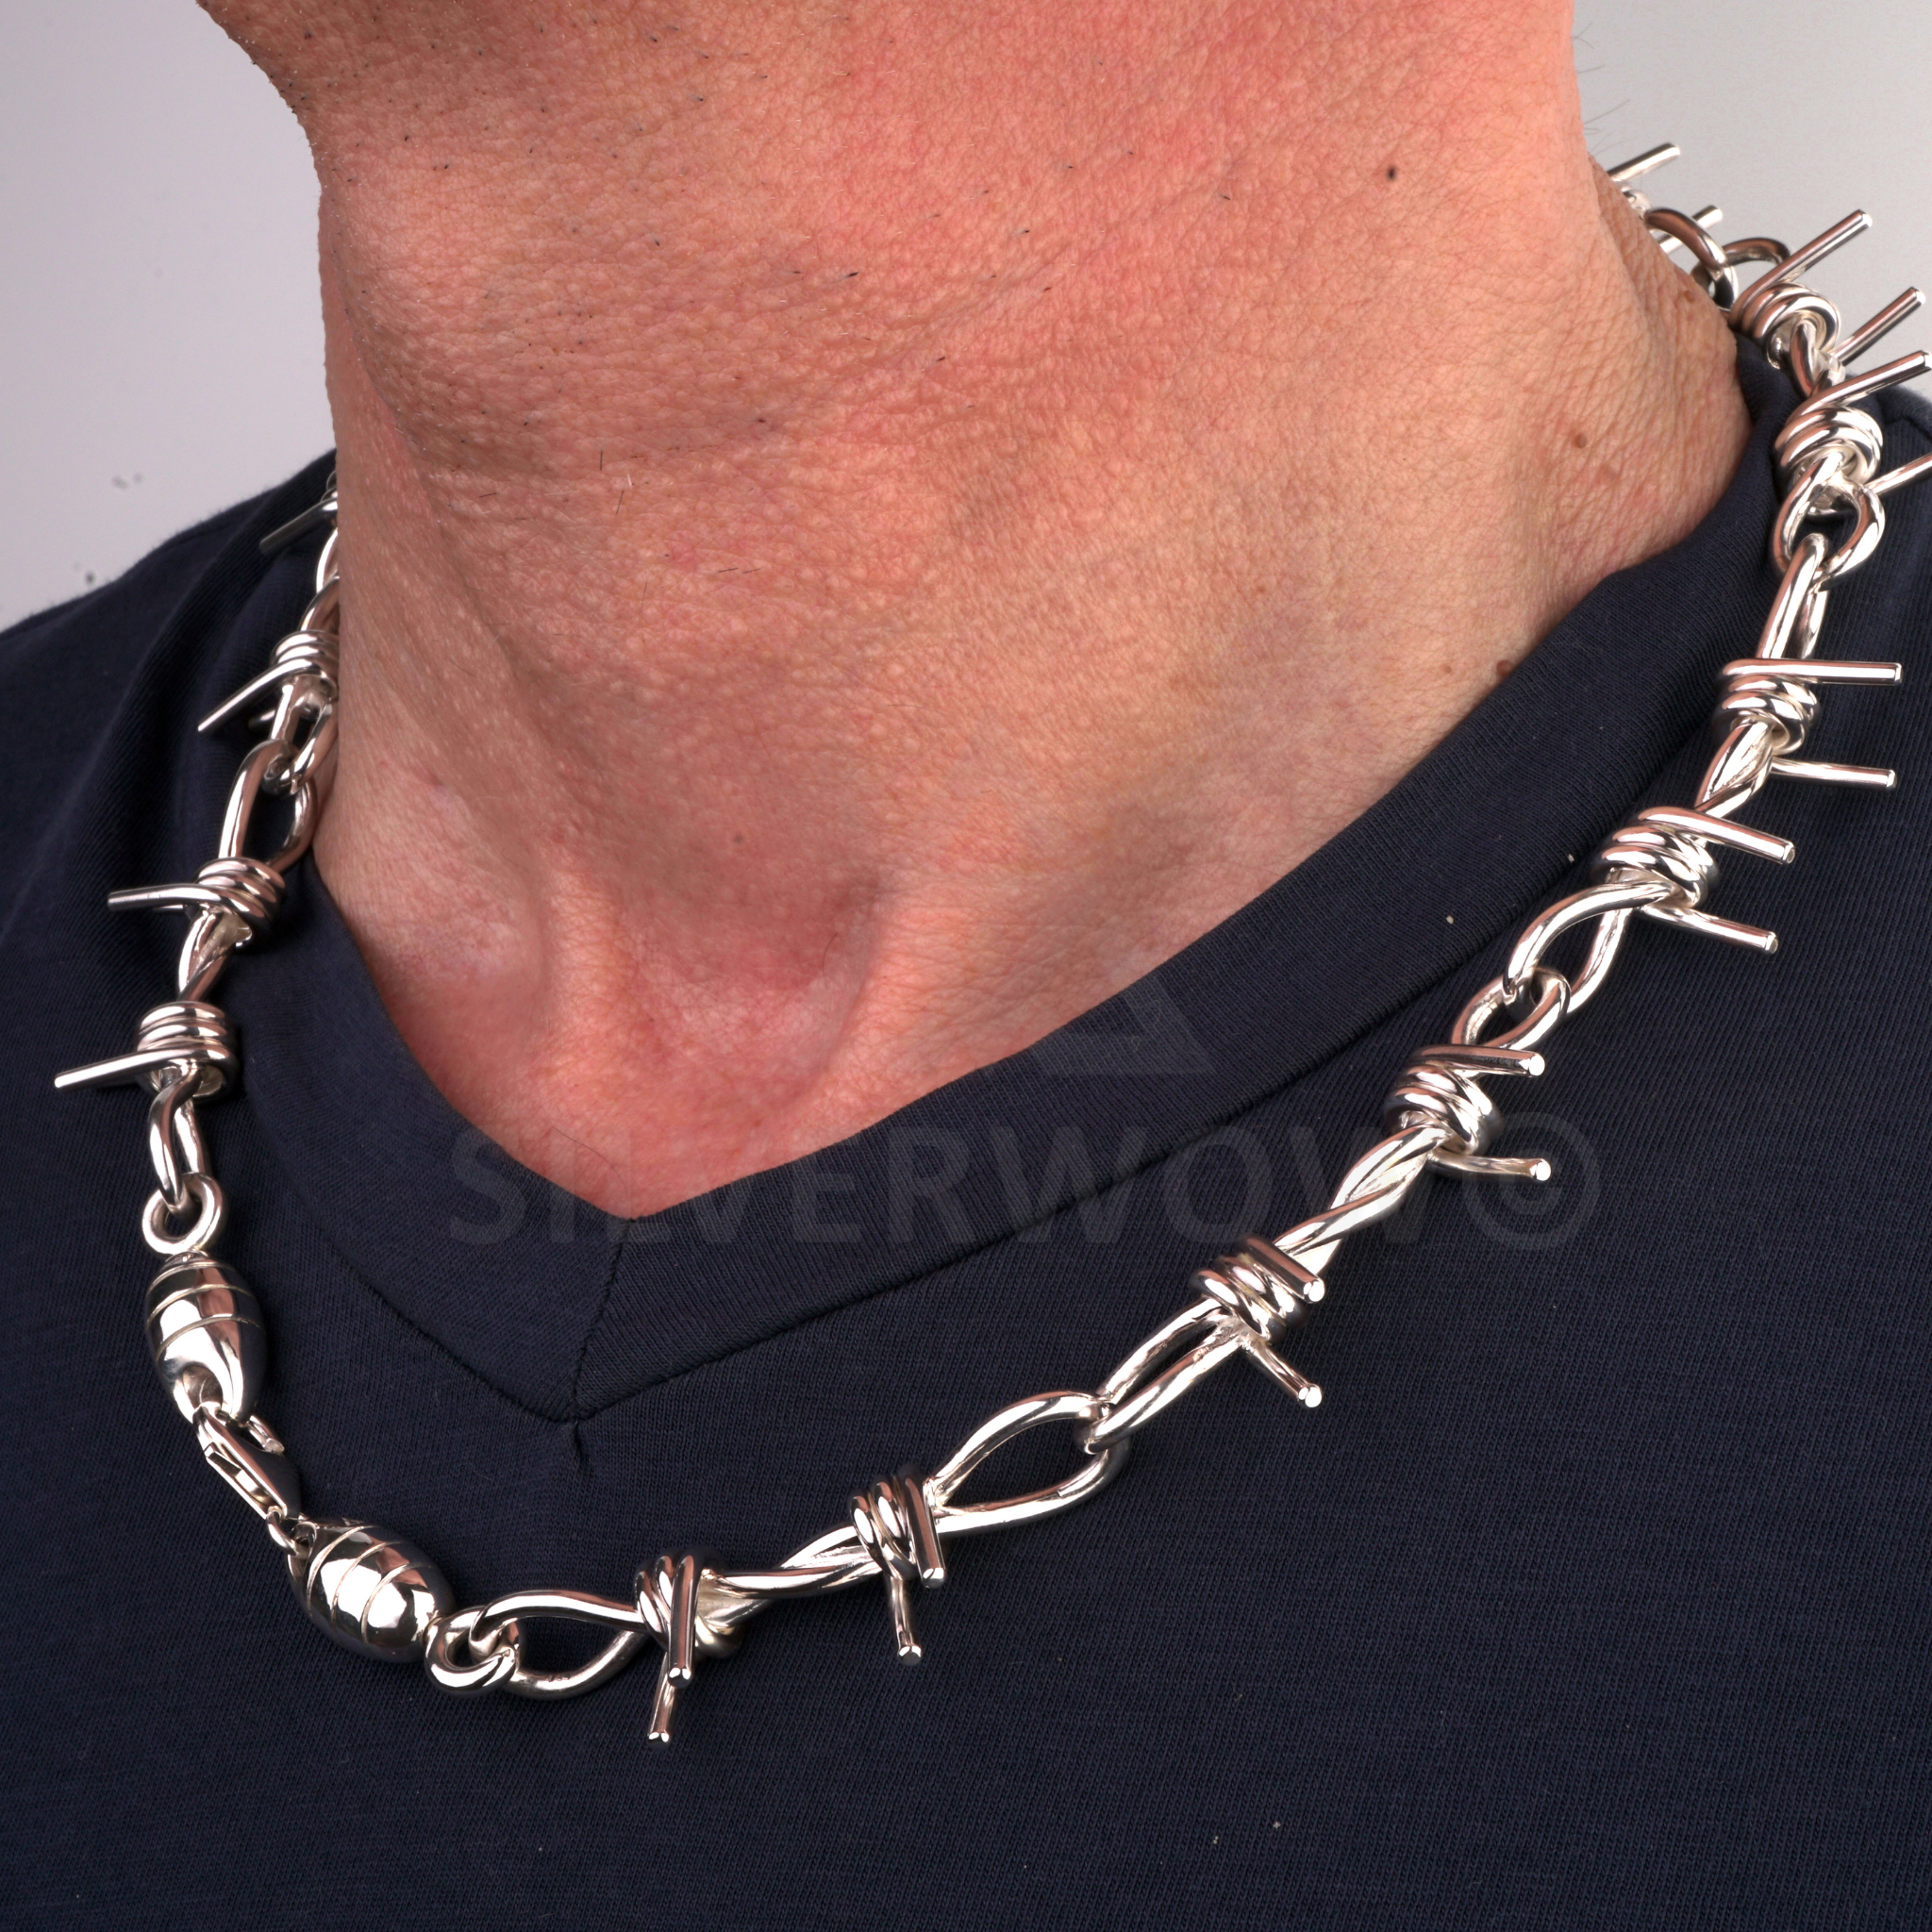 HZMAN Men's Punk Gothic Bike Alloy Barbed Wire Necklace 20 Inch (silver-3)  - Walmart.com